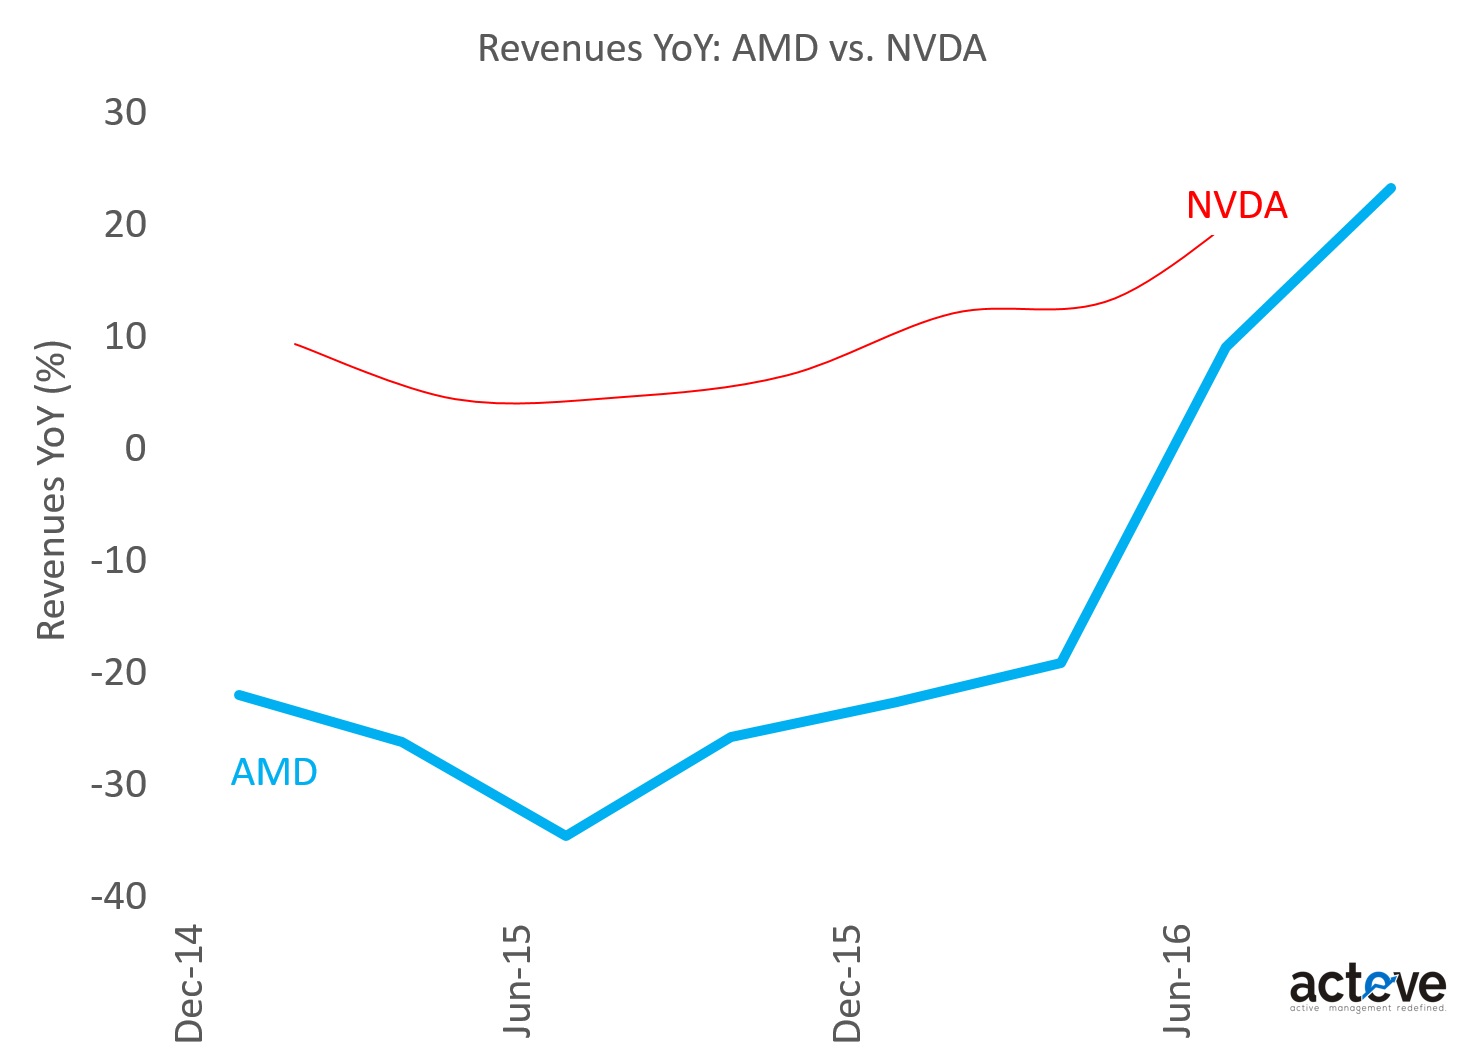 AMD vs. NVDA Revenues YoY